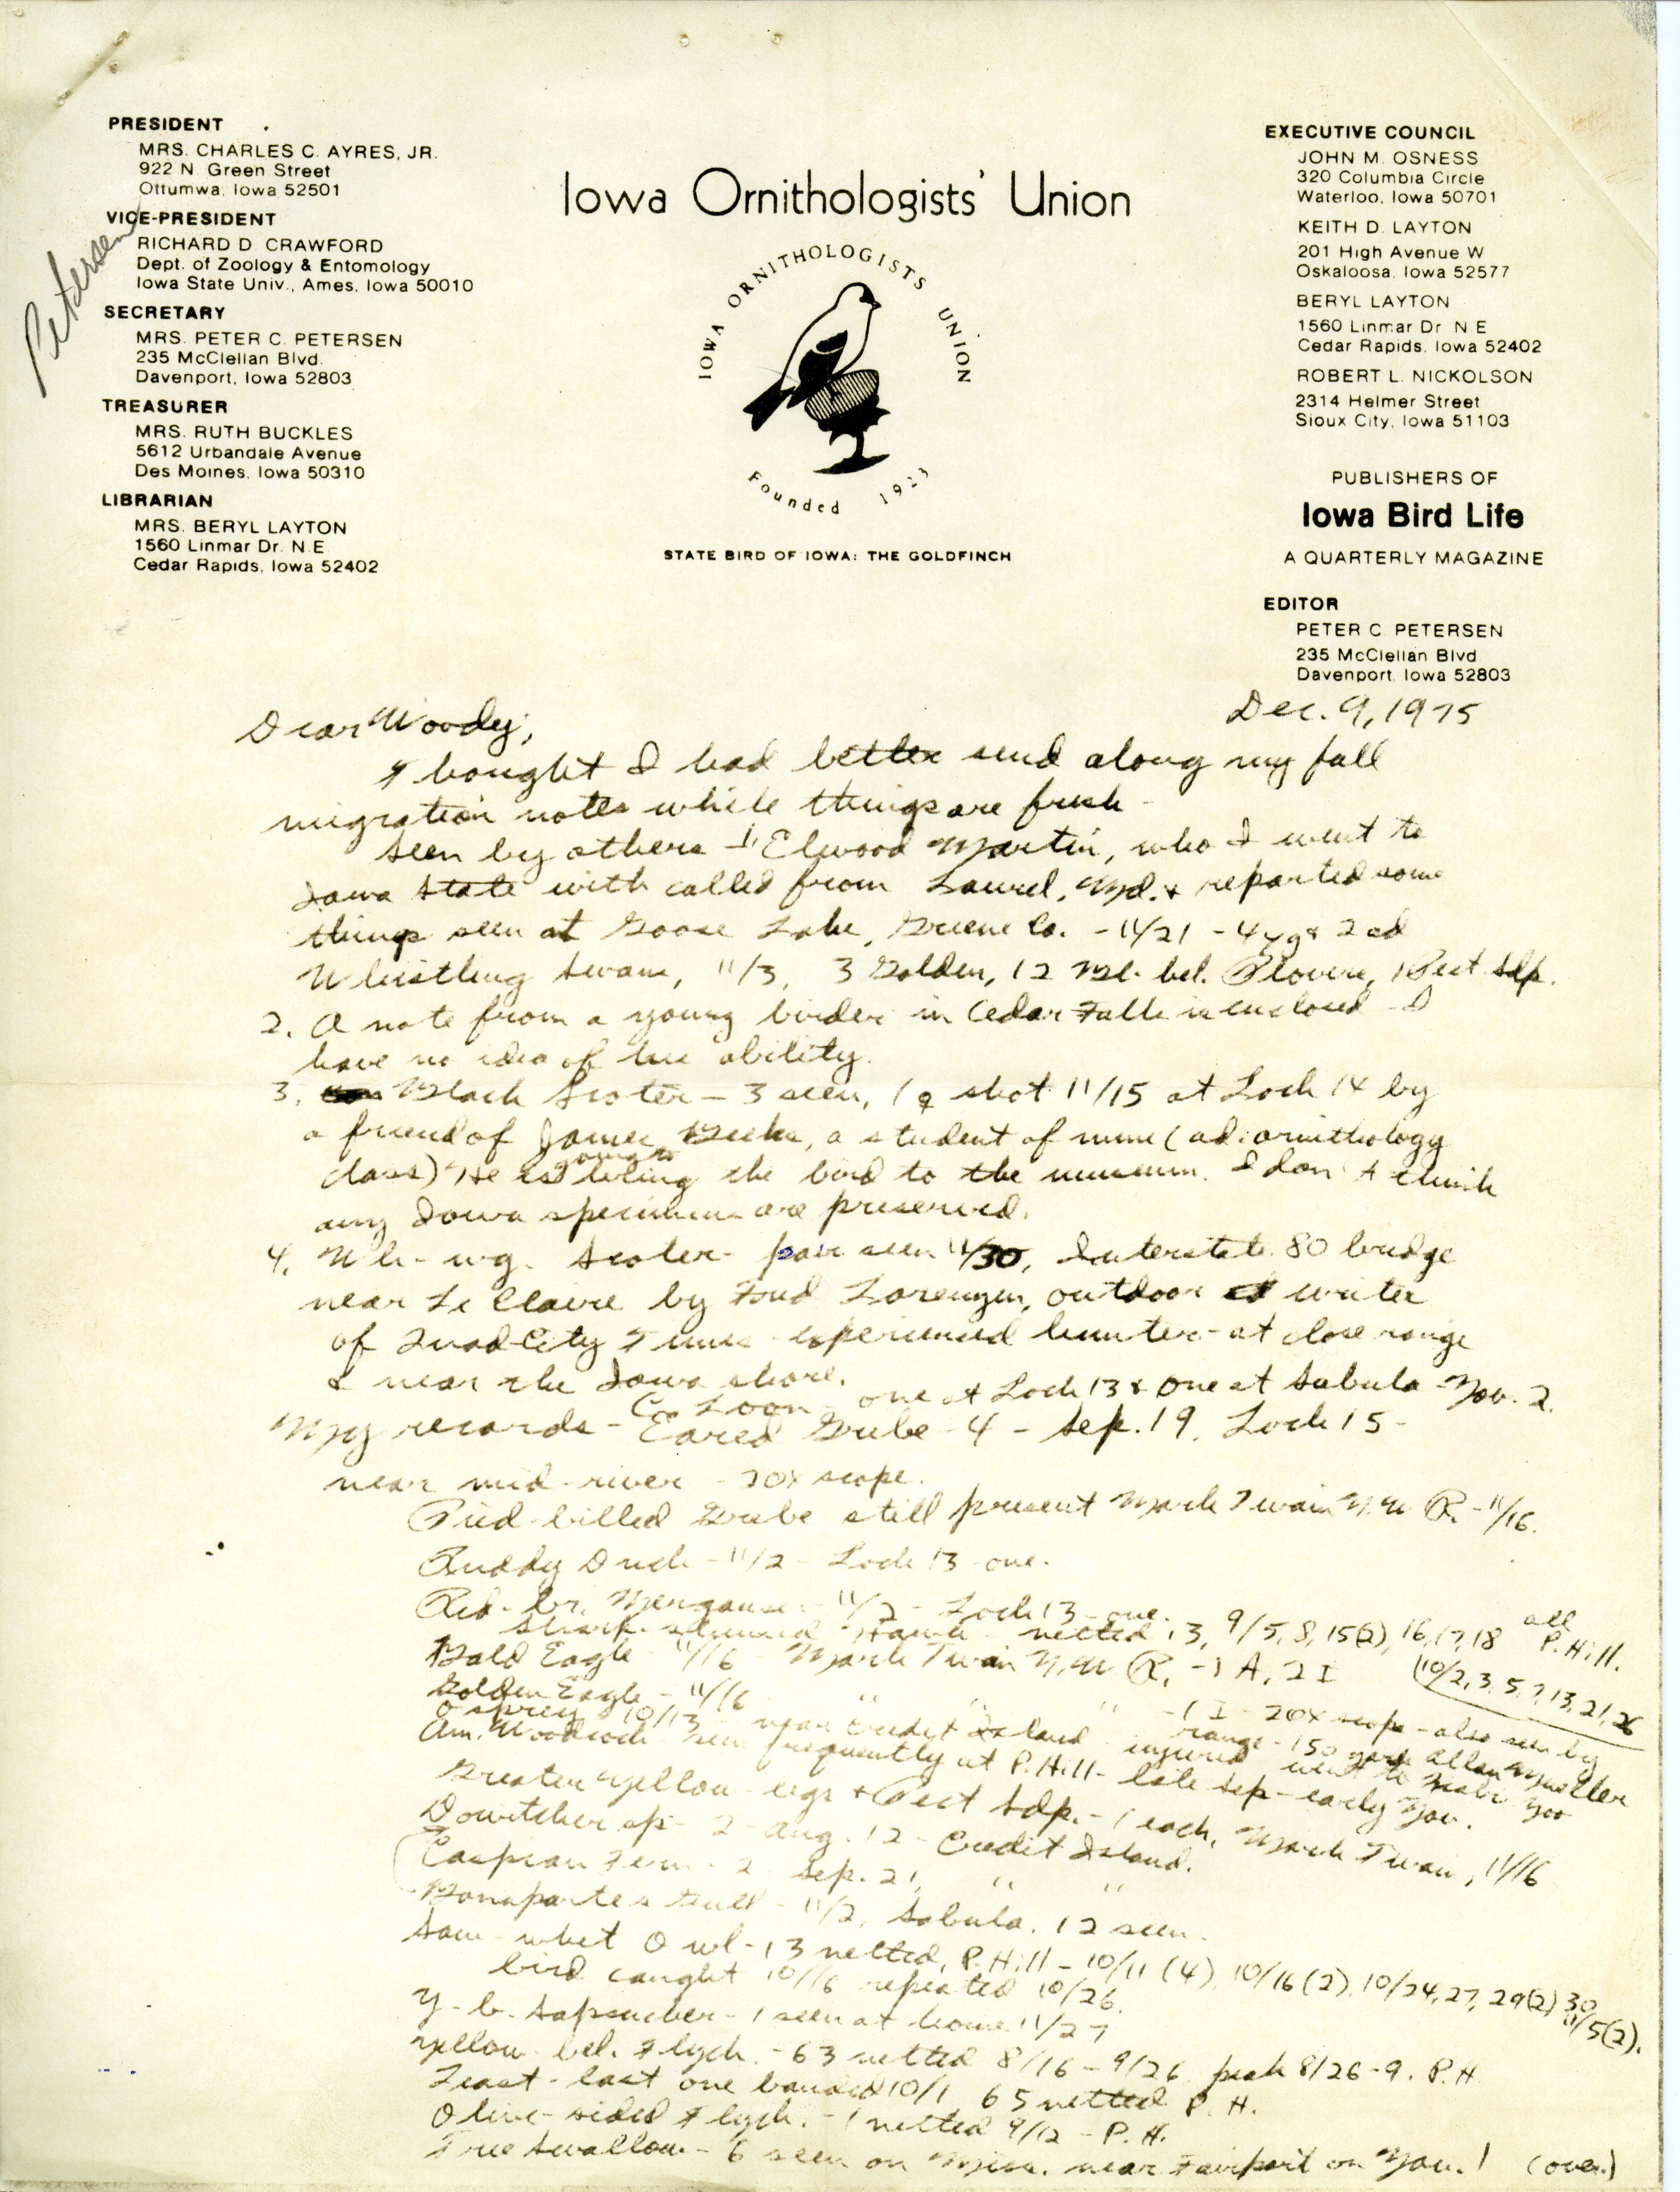 Peter C. Petersen letter to Woodward H. Brown, regarding fall migration 1975, December 9, 1975